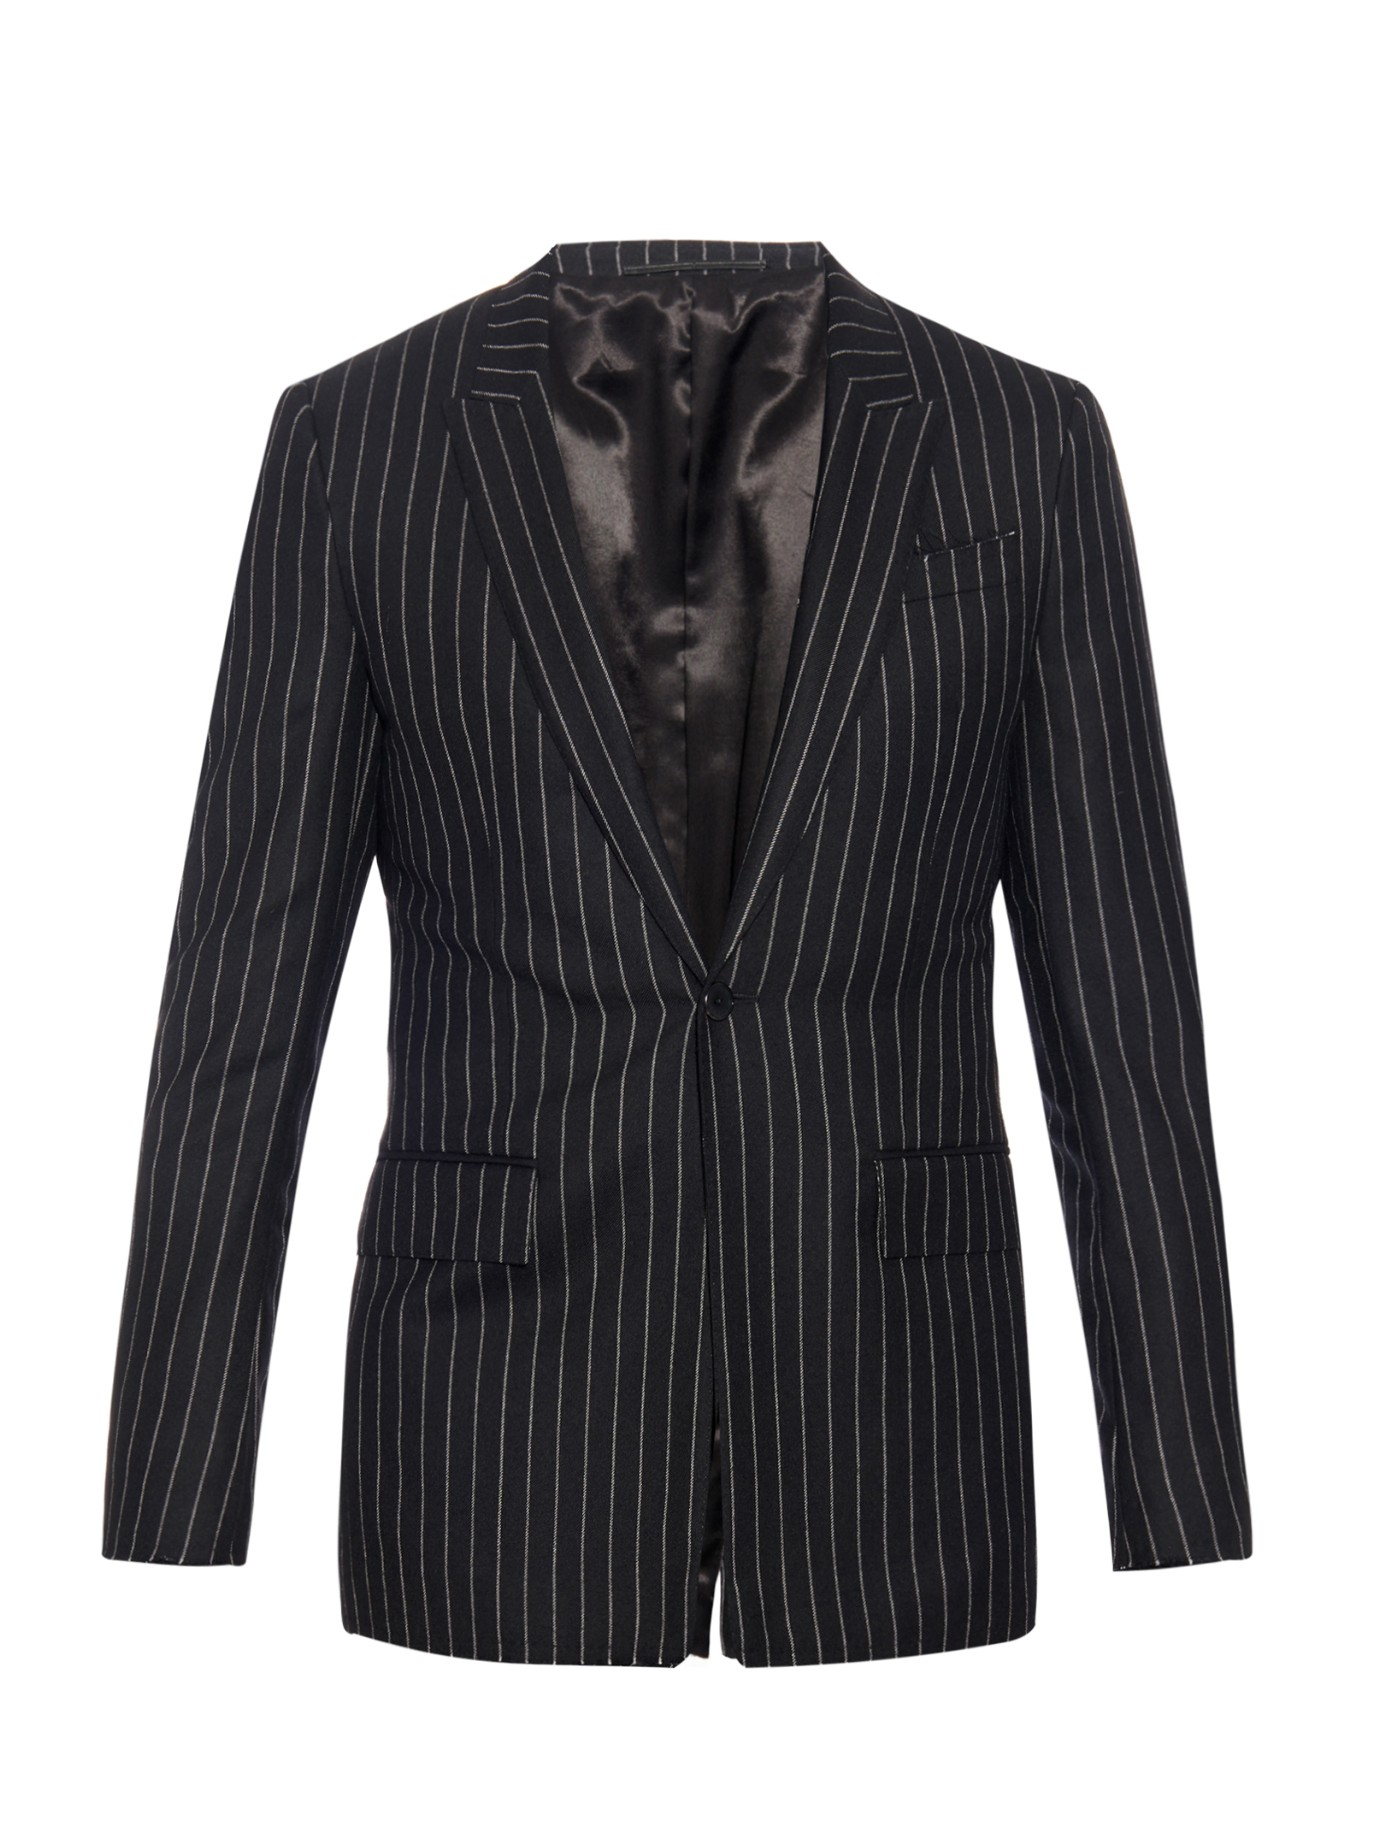 Lyst - Givenchy Raw-edge Pinstripe Wool Blazer in Black for Men